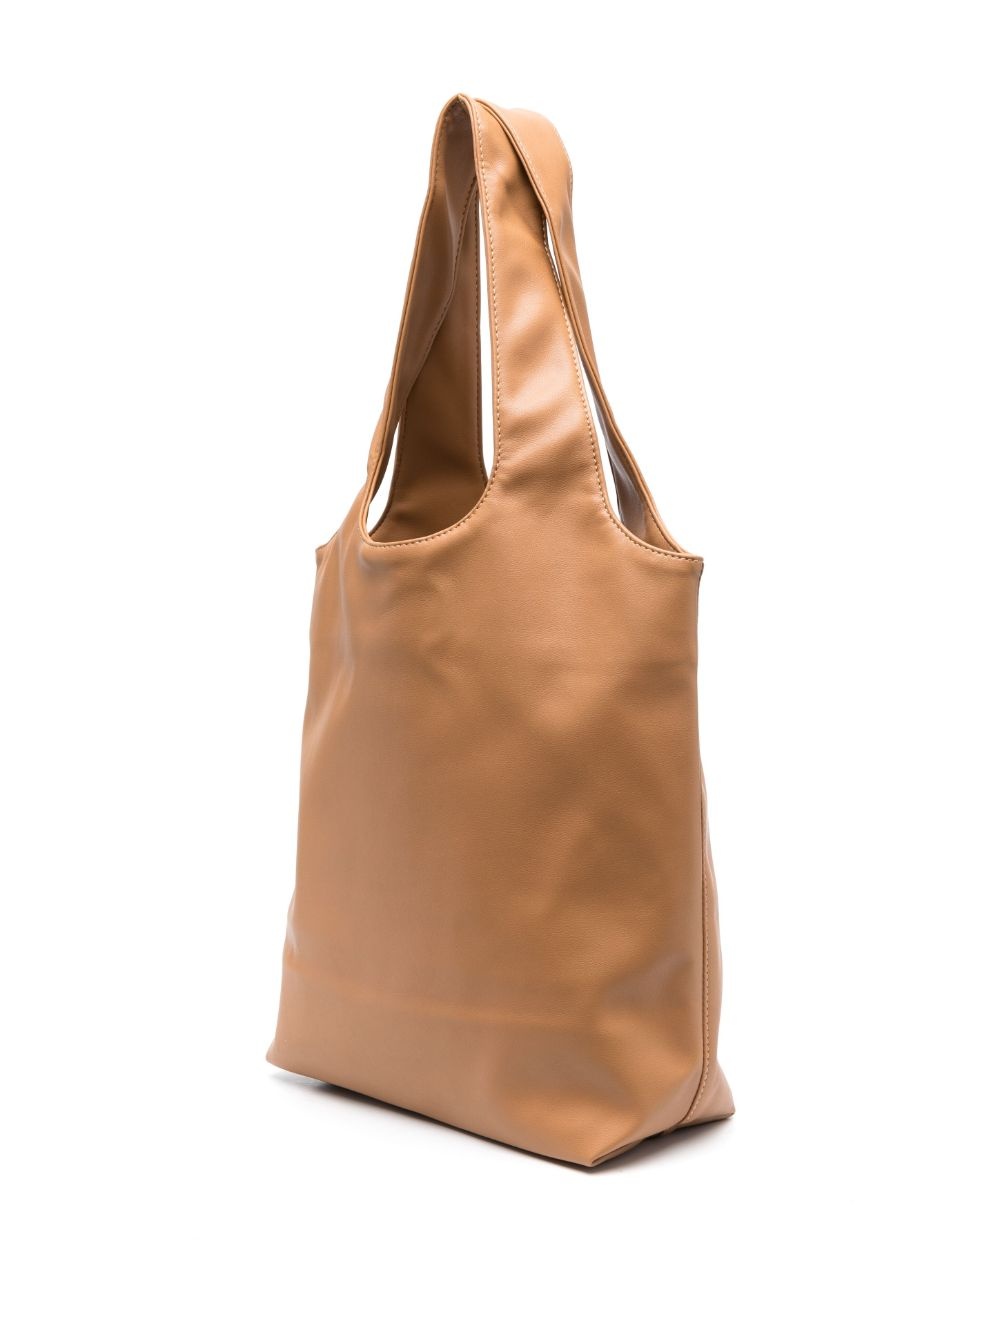 A.P.C. small Ninon tote bag | REVERSIBLE